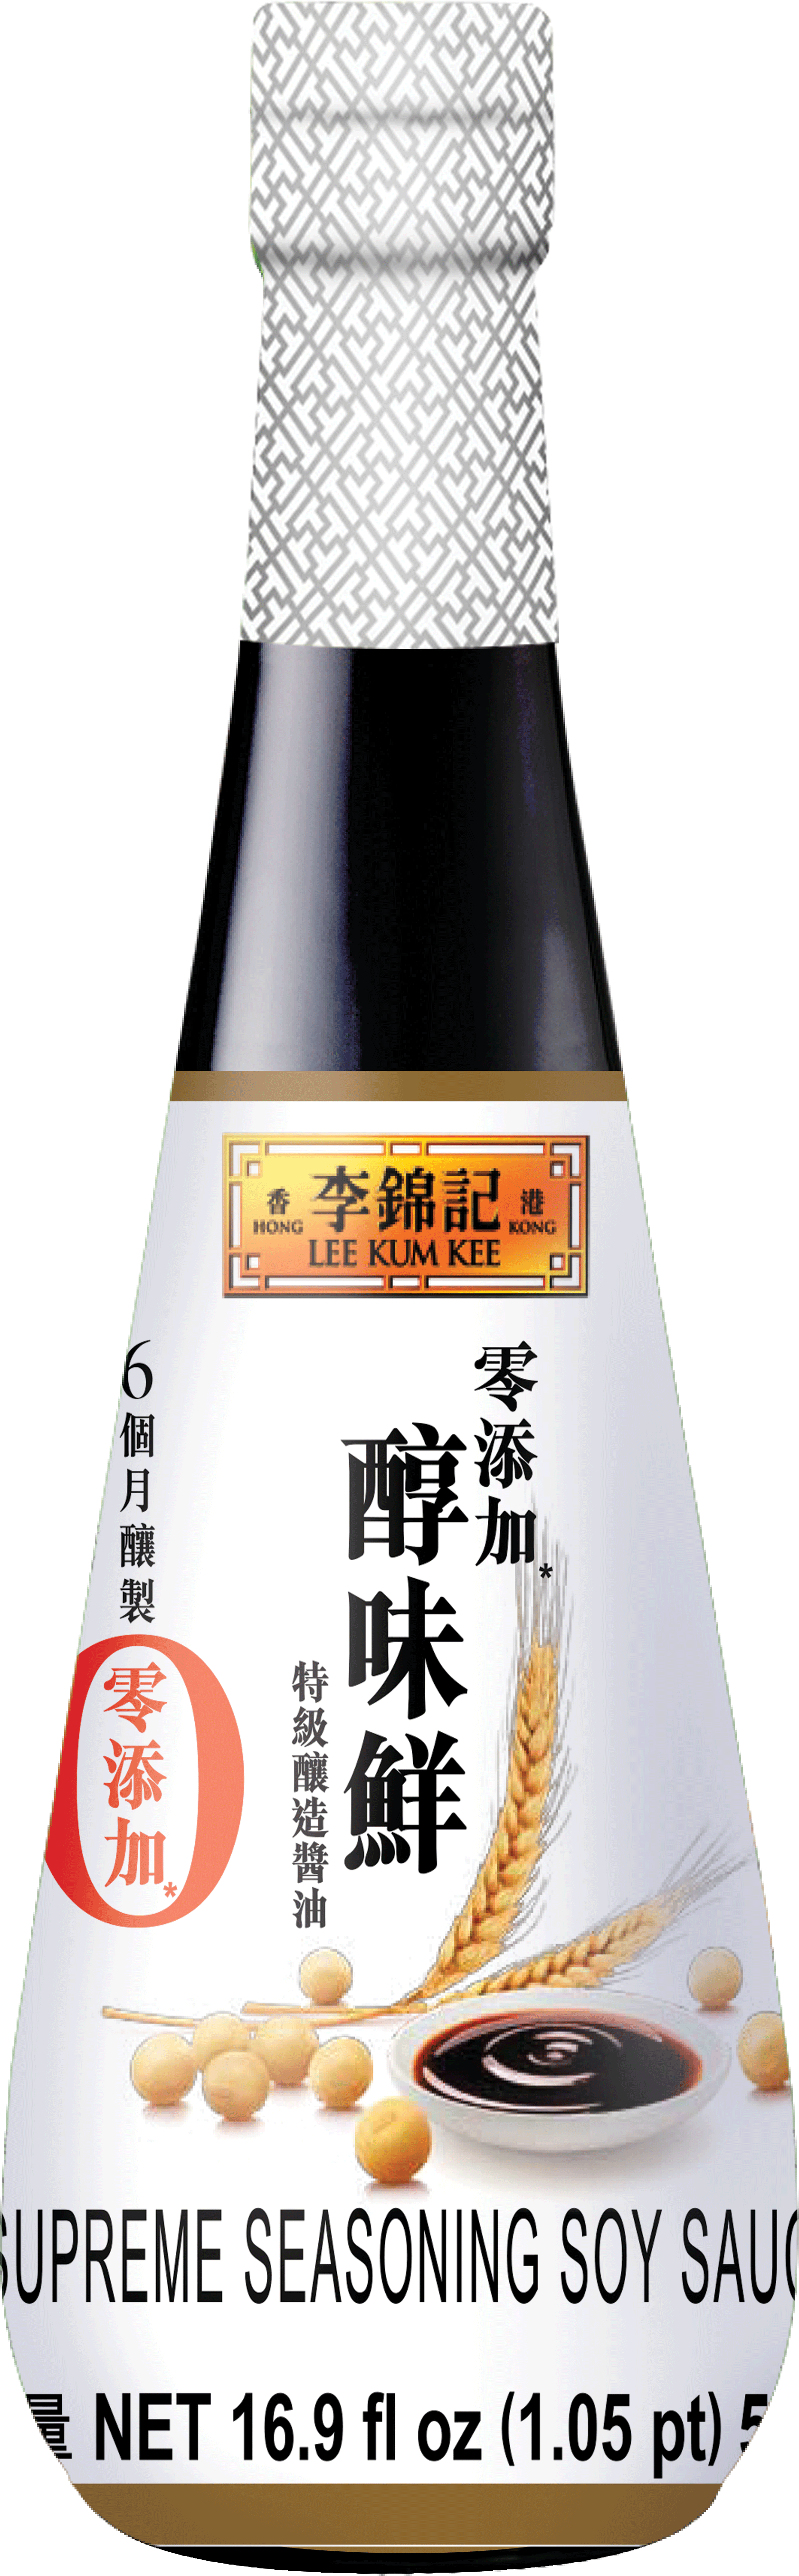 Lee Kum Kee Supreme Seasoning Soy Sauce Bottle PNG